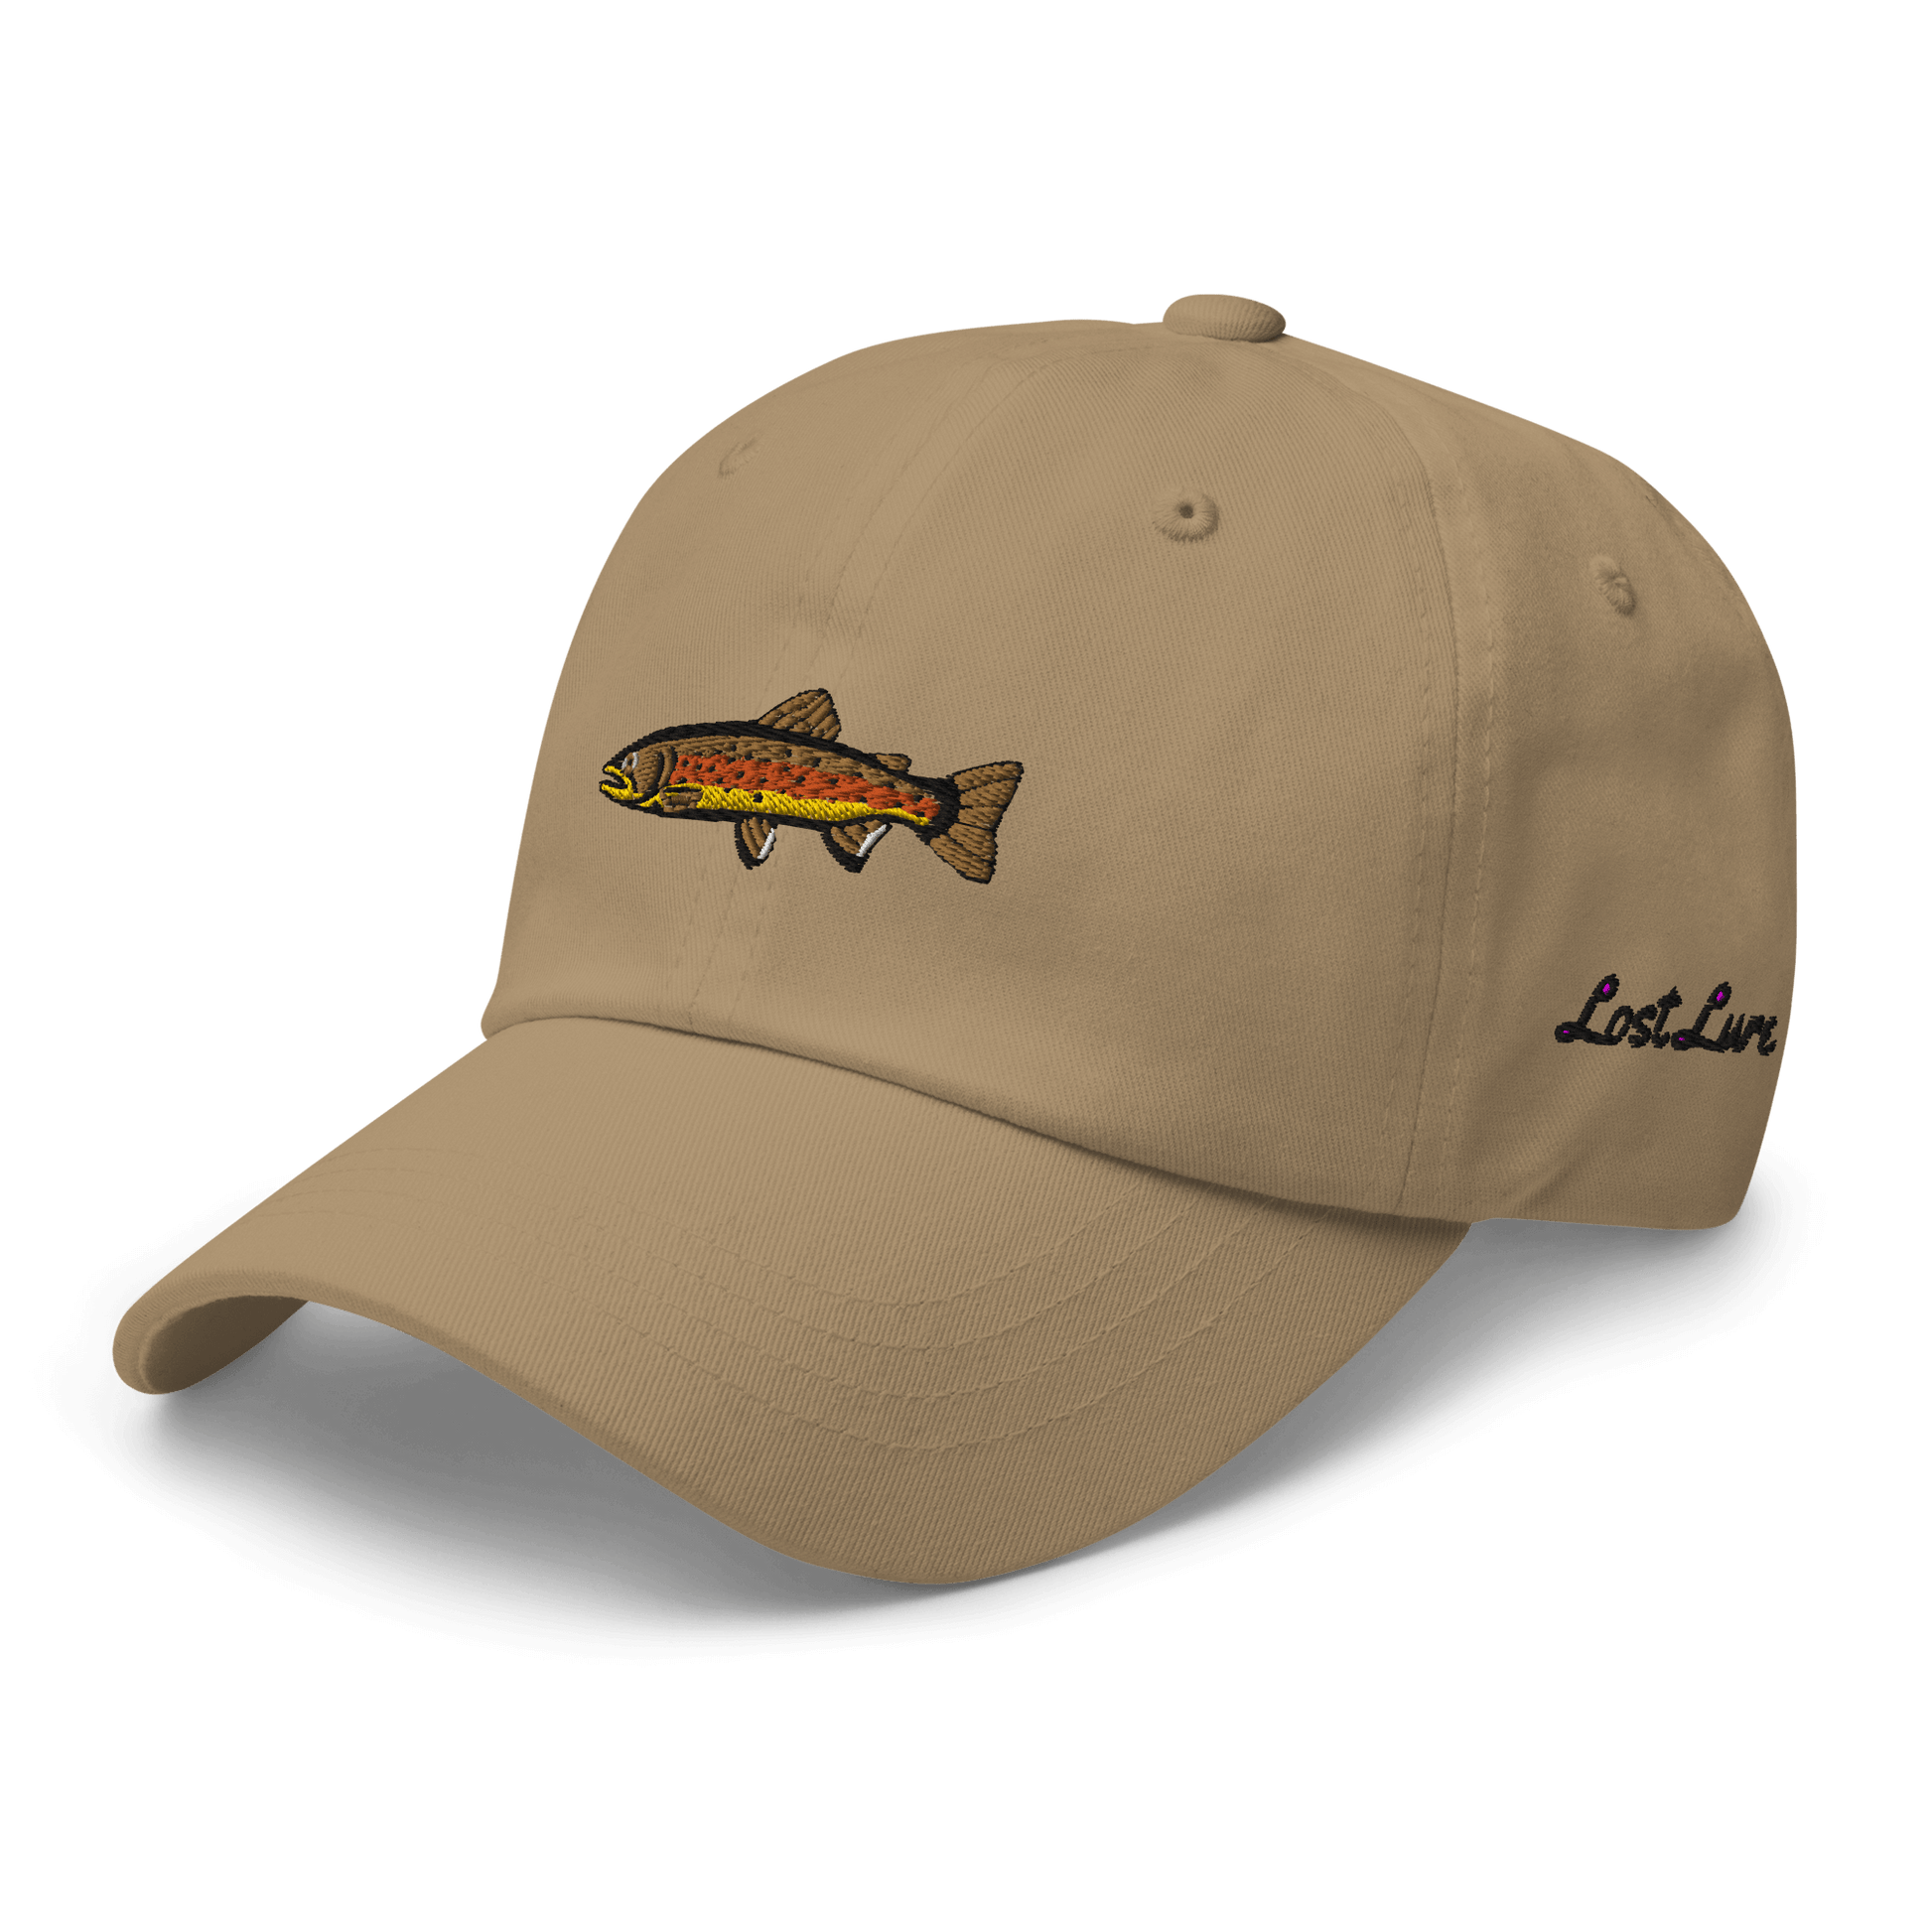 Trout Fly Fishing Hat Cap Brown Khaki Tan Fish Hunting Outdoors